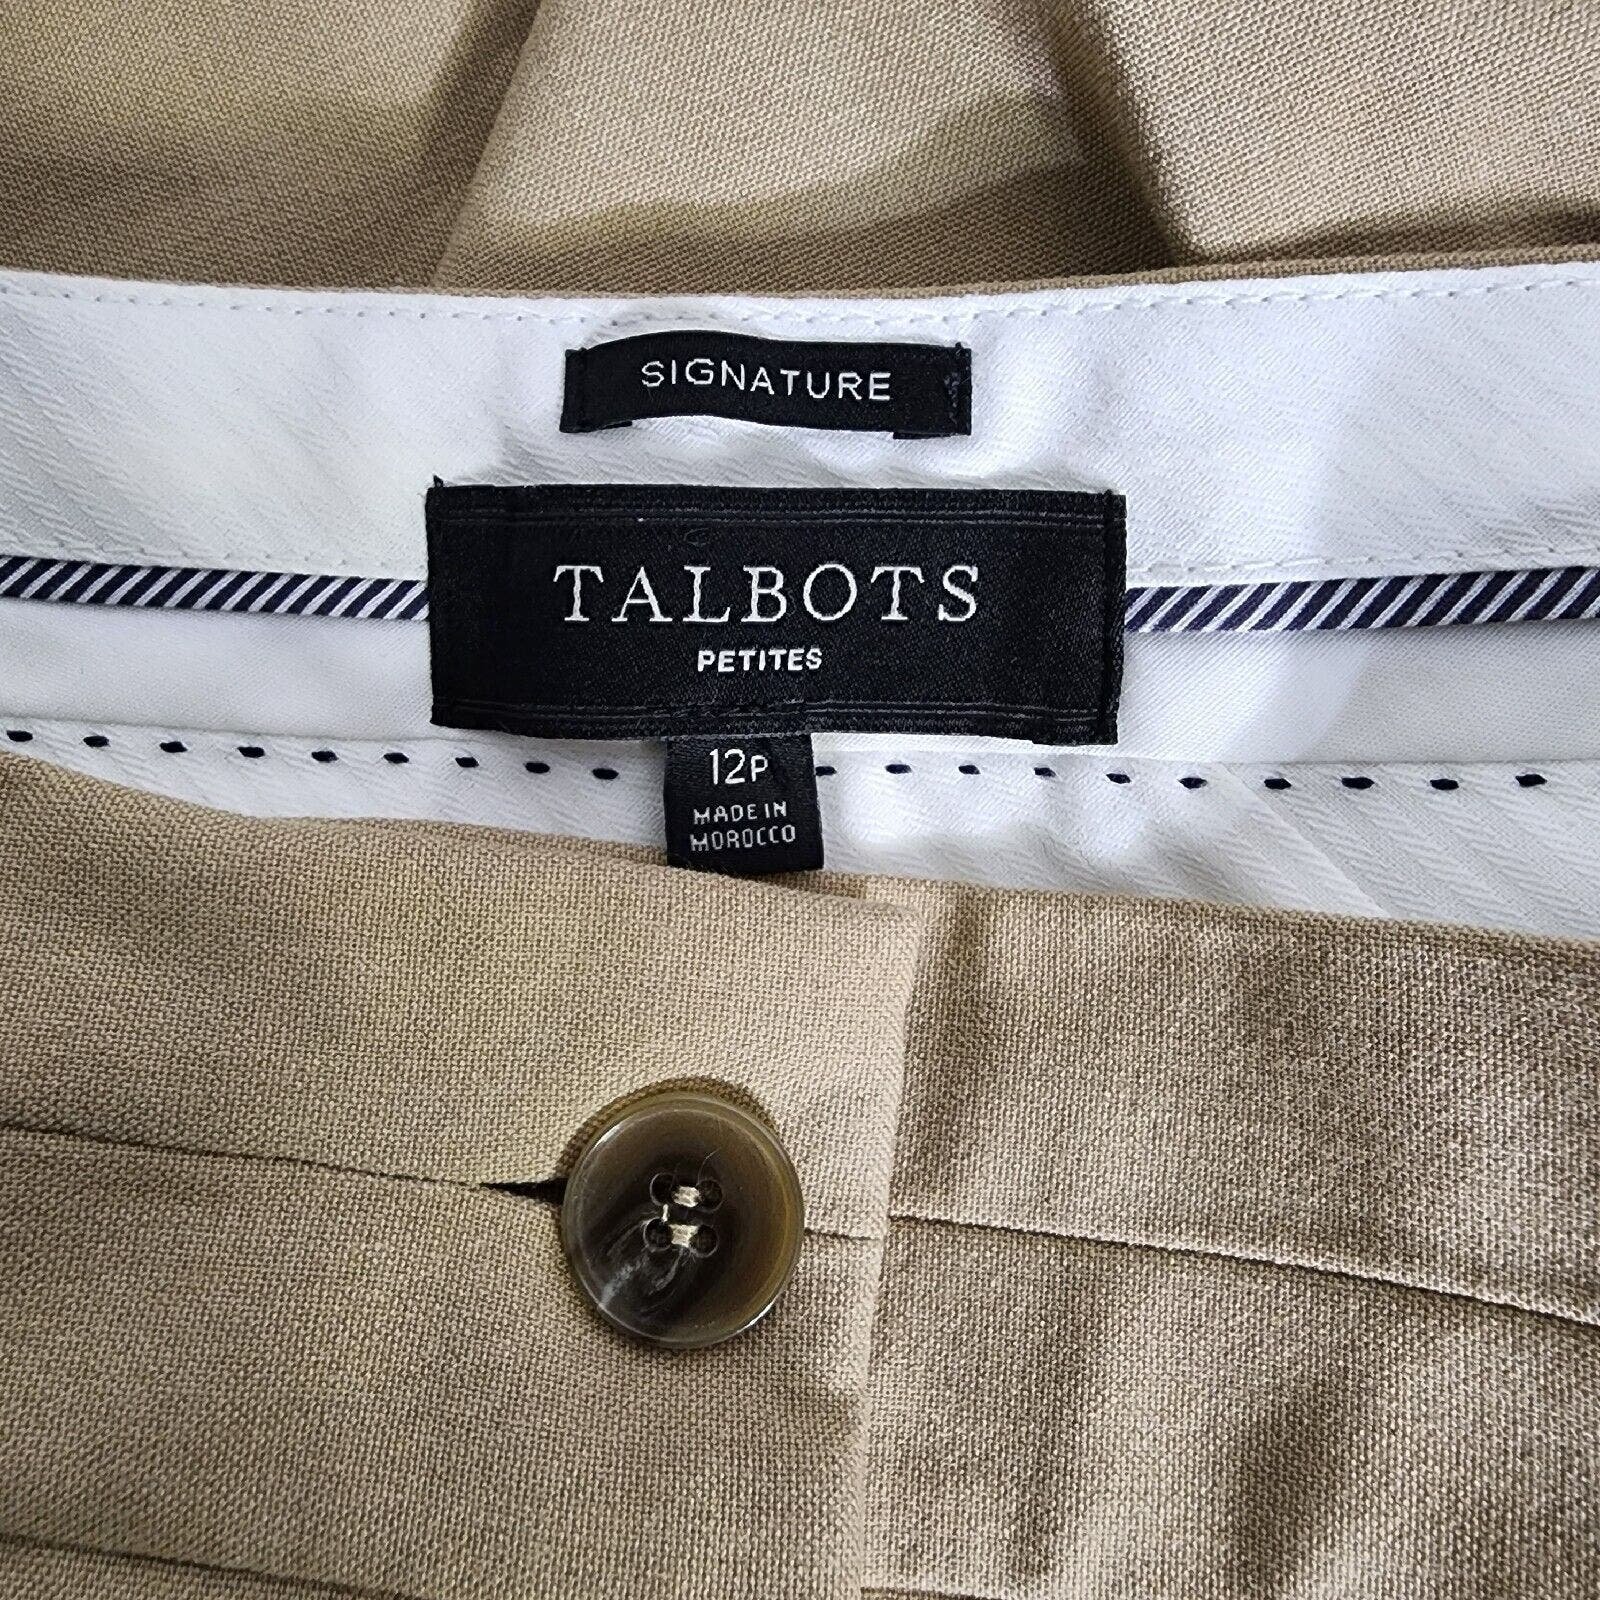 Nice Talbots Petites Womens Cropped Pants 12P Signature Chino Beige Khaki Mid Rise Of0uSxP8m Fashion